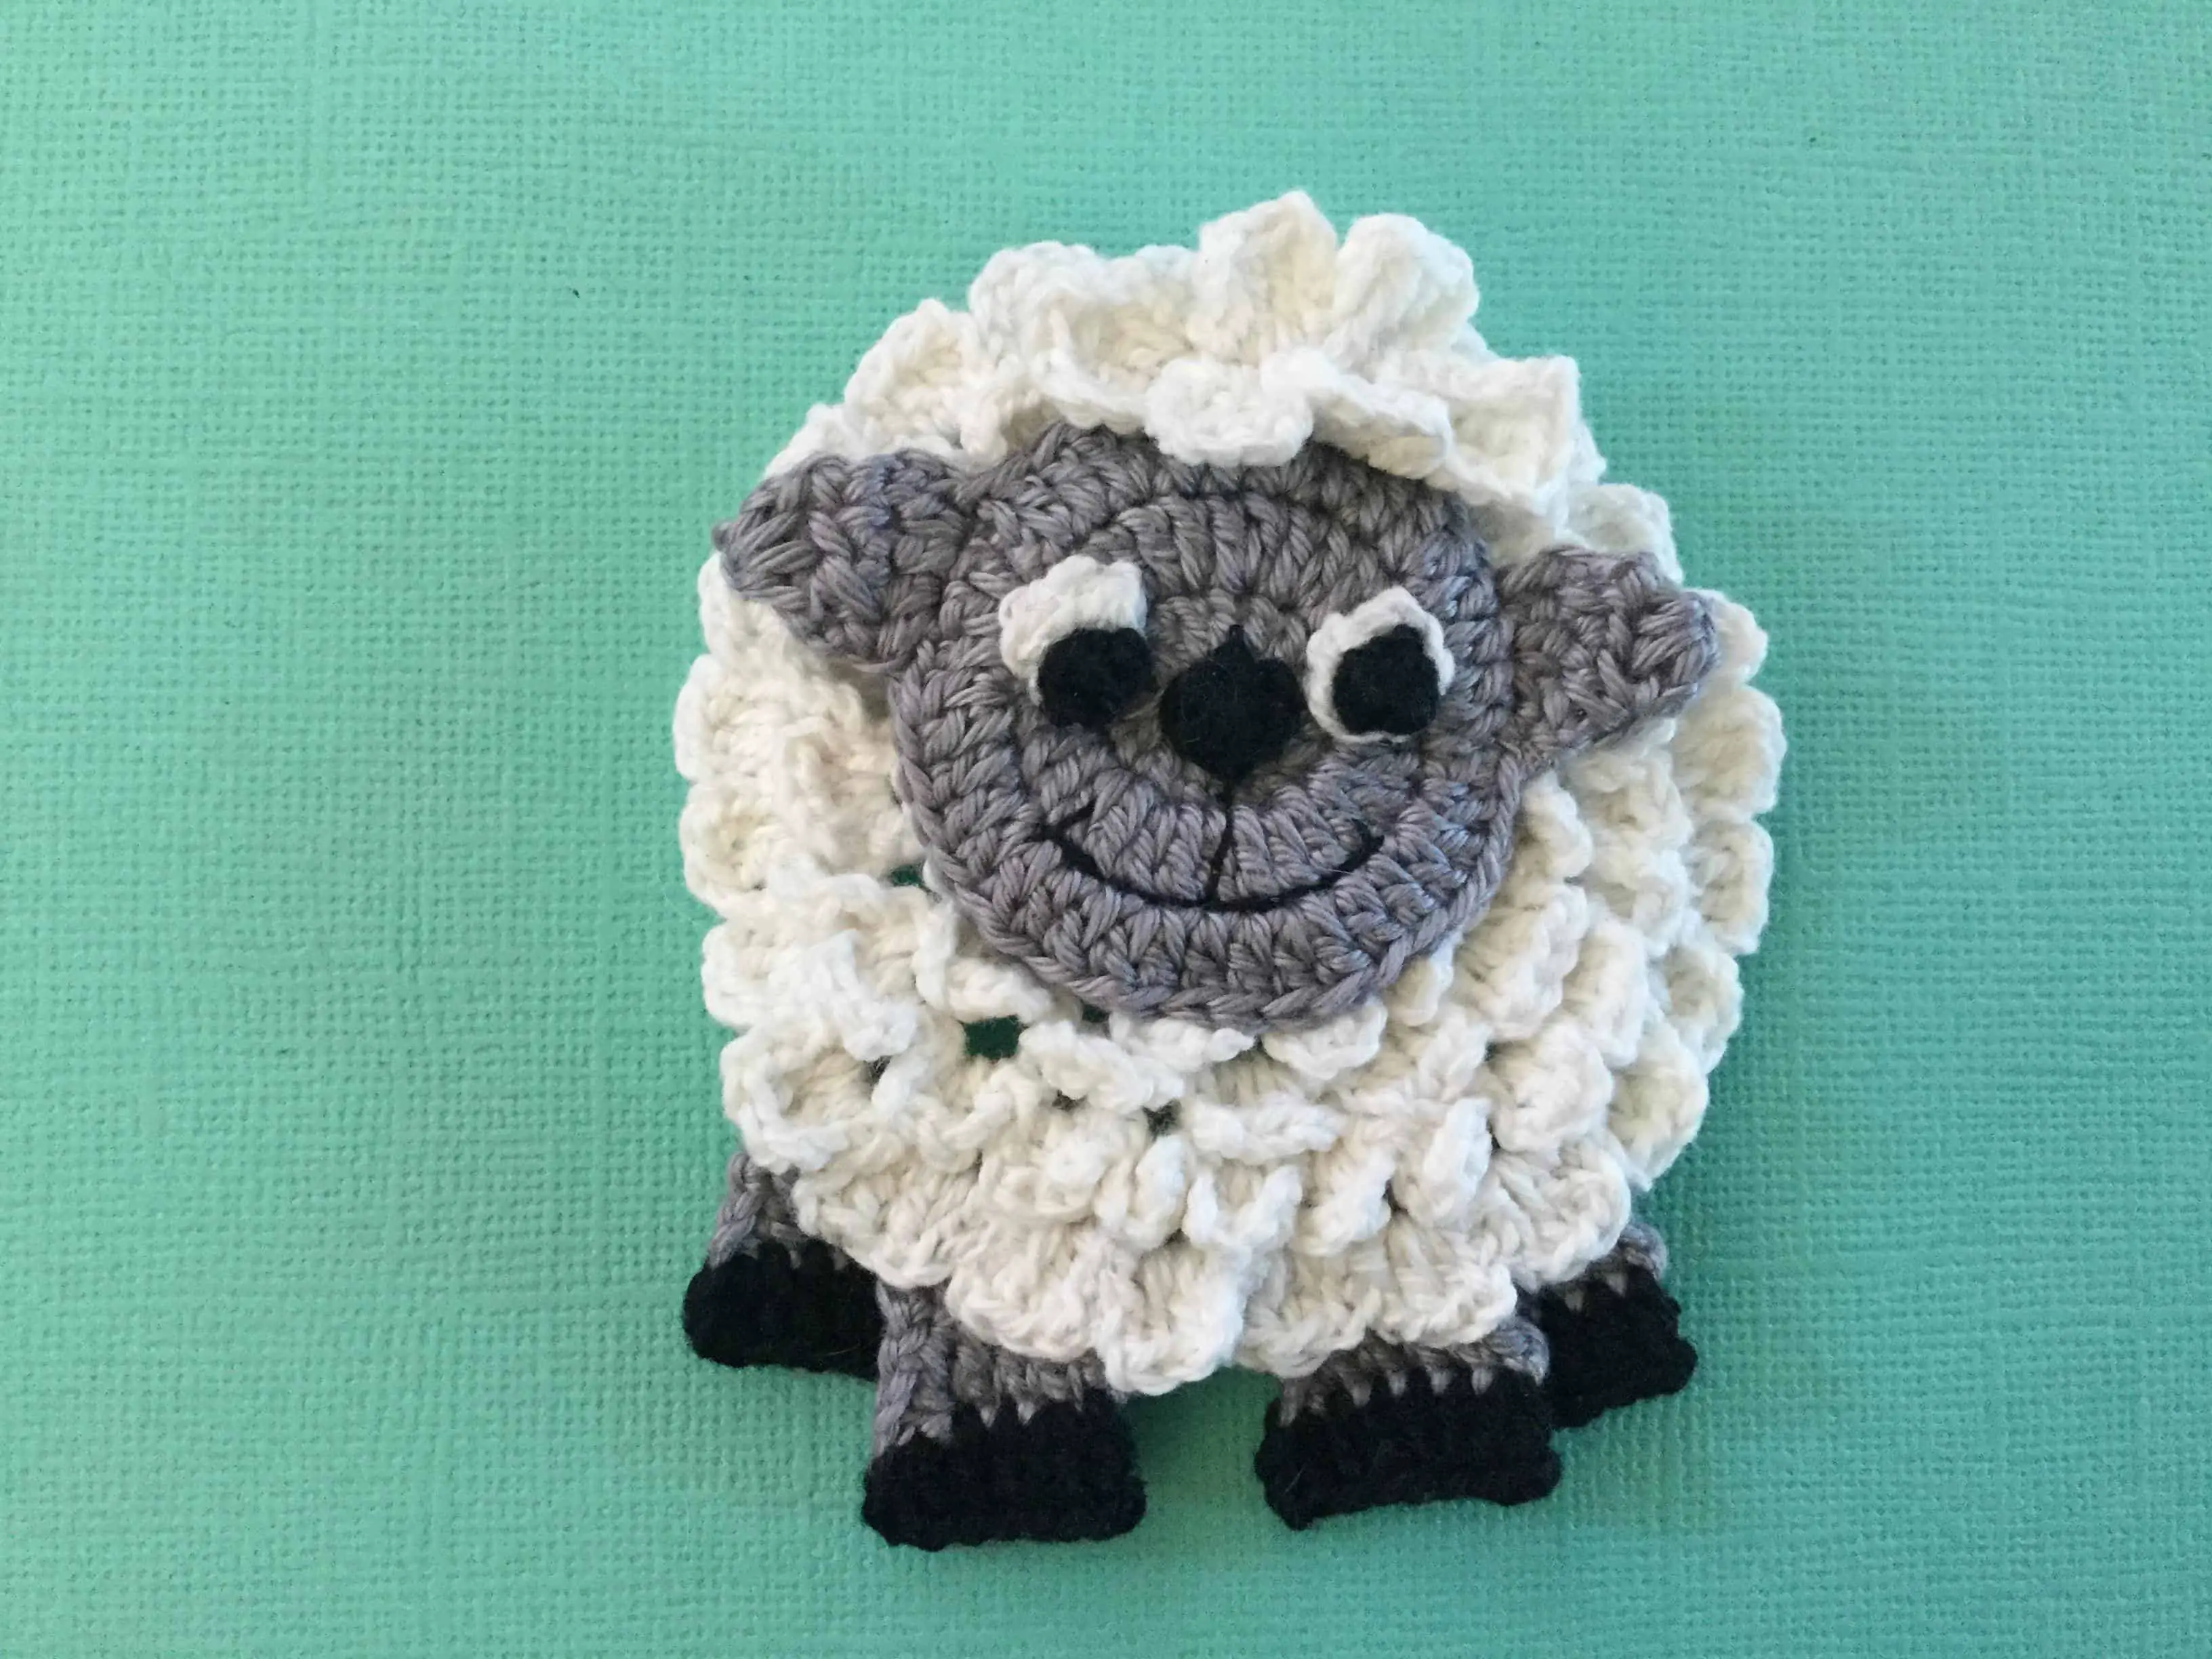 Finished crochet sheep